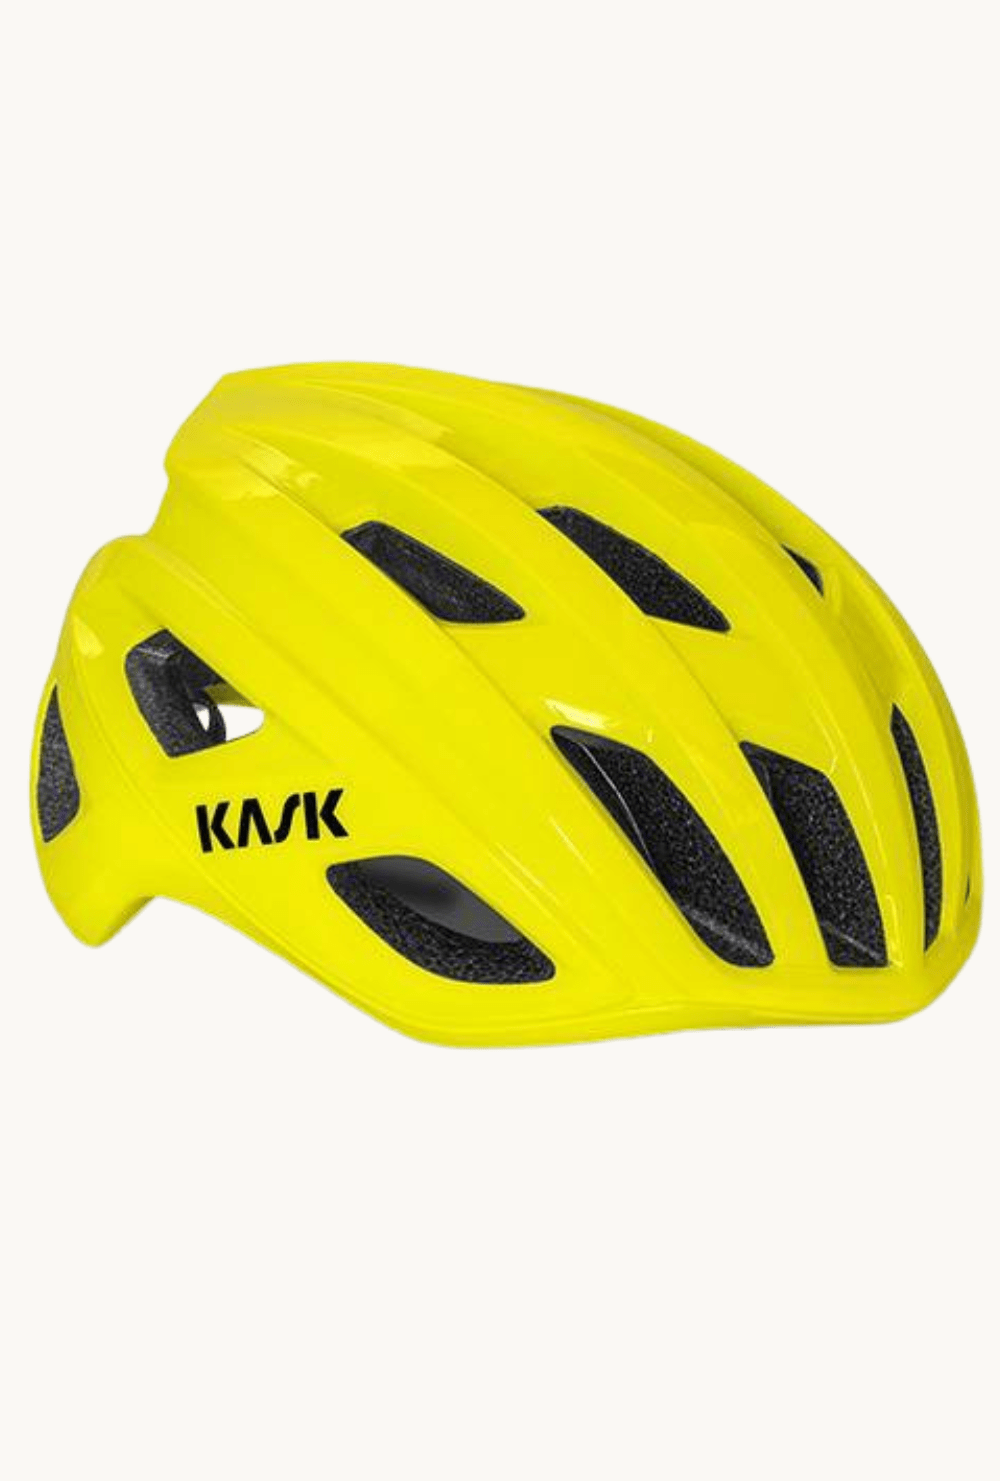 Helmet - Kask Mojito Yellowlarge / Yellow